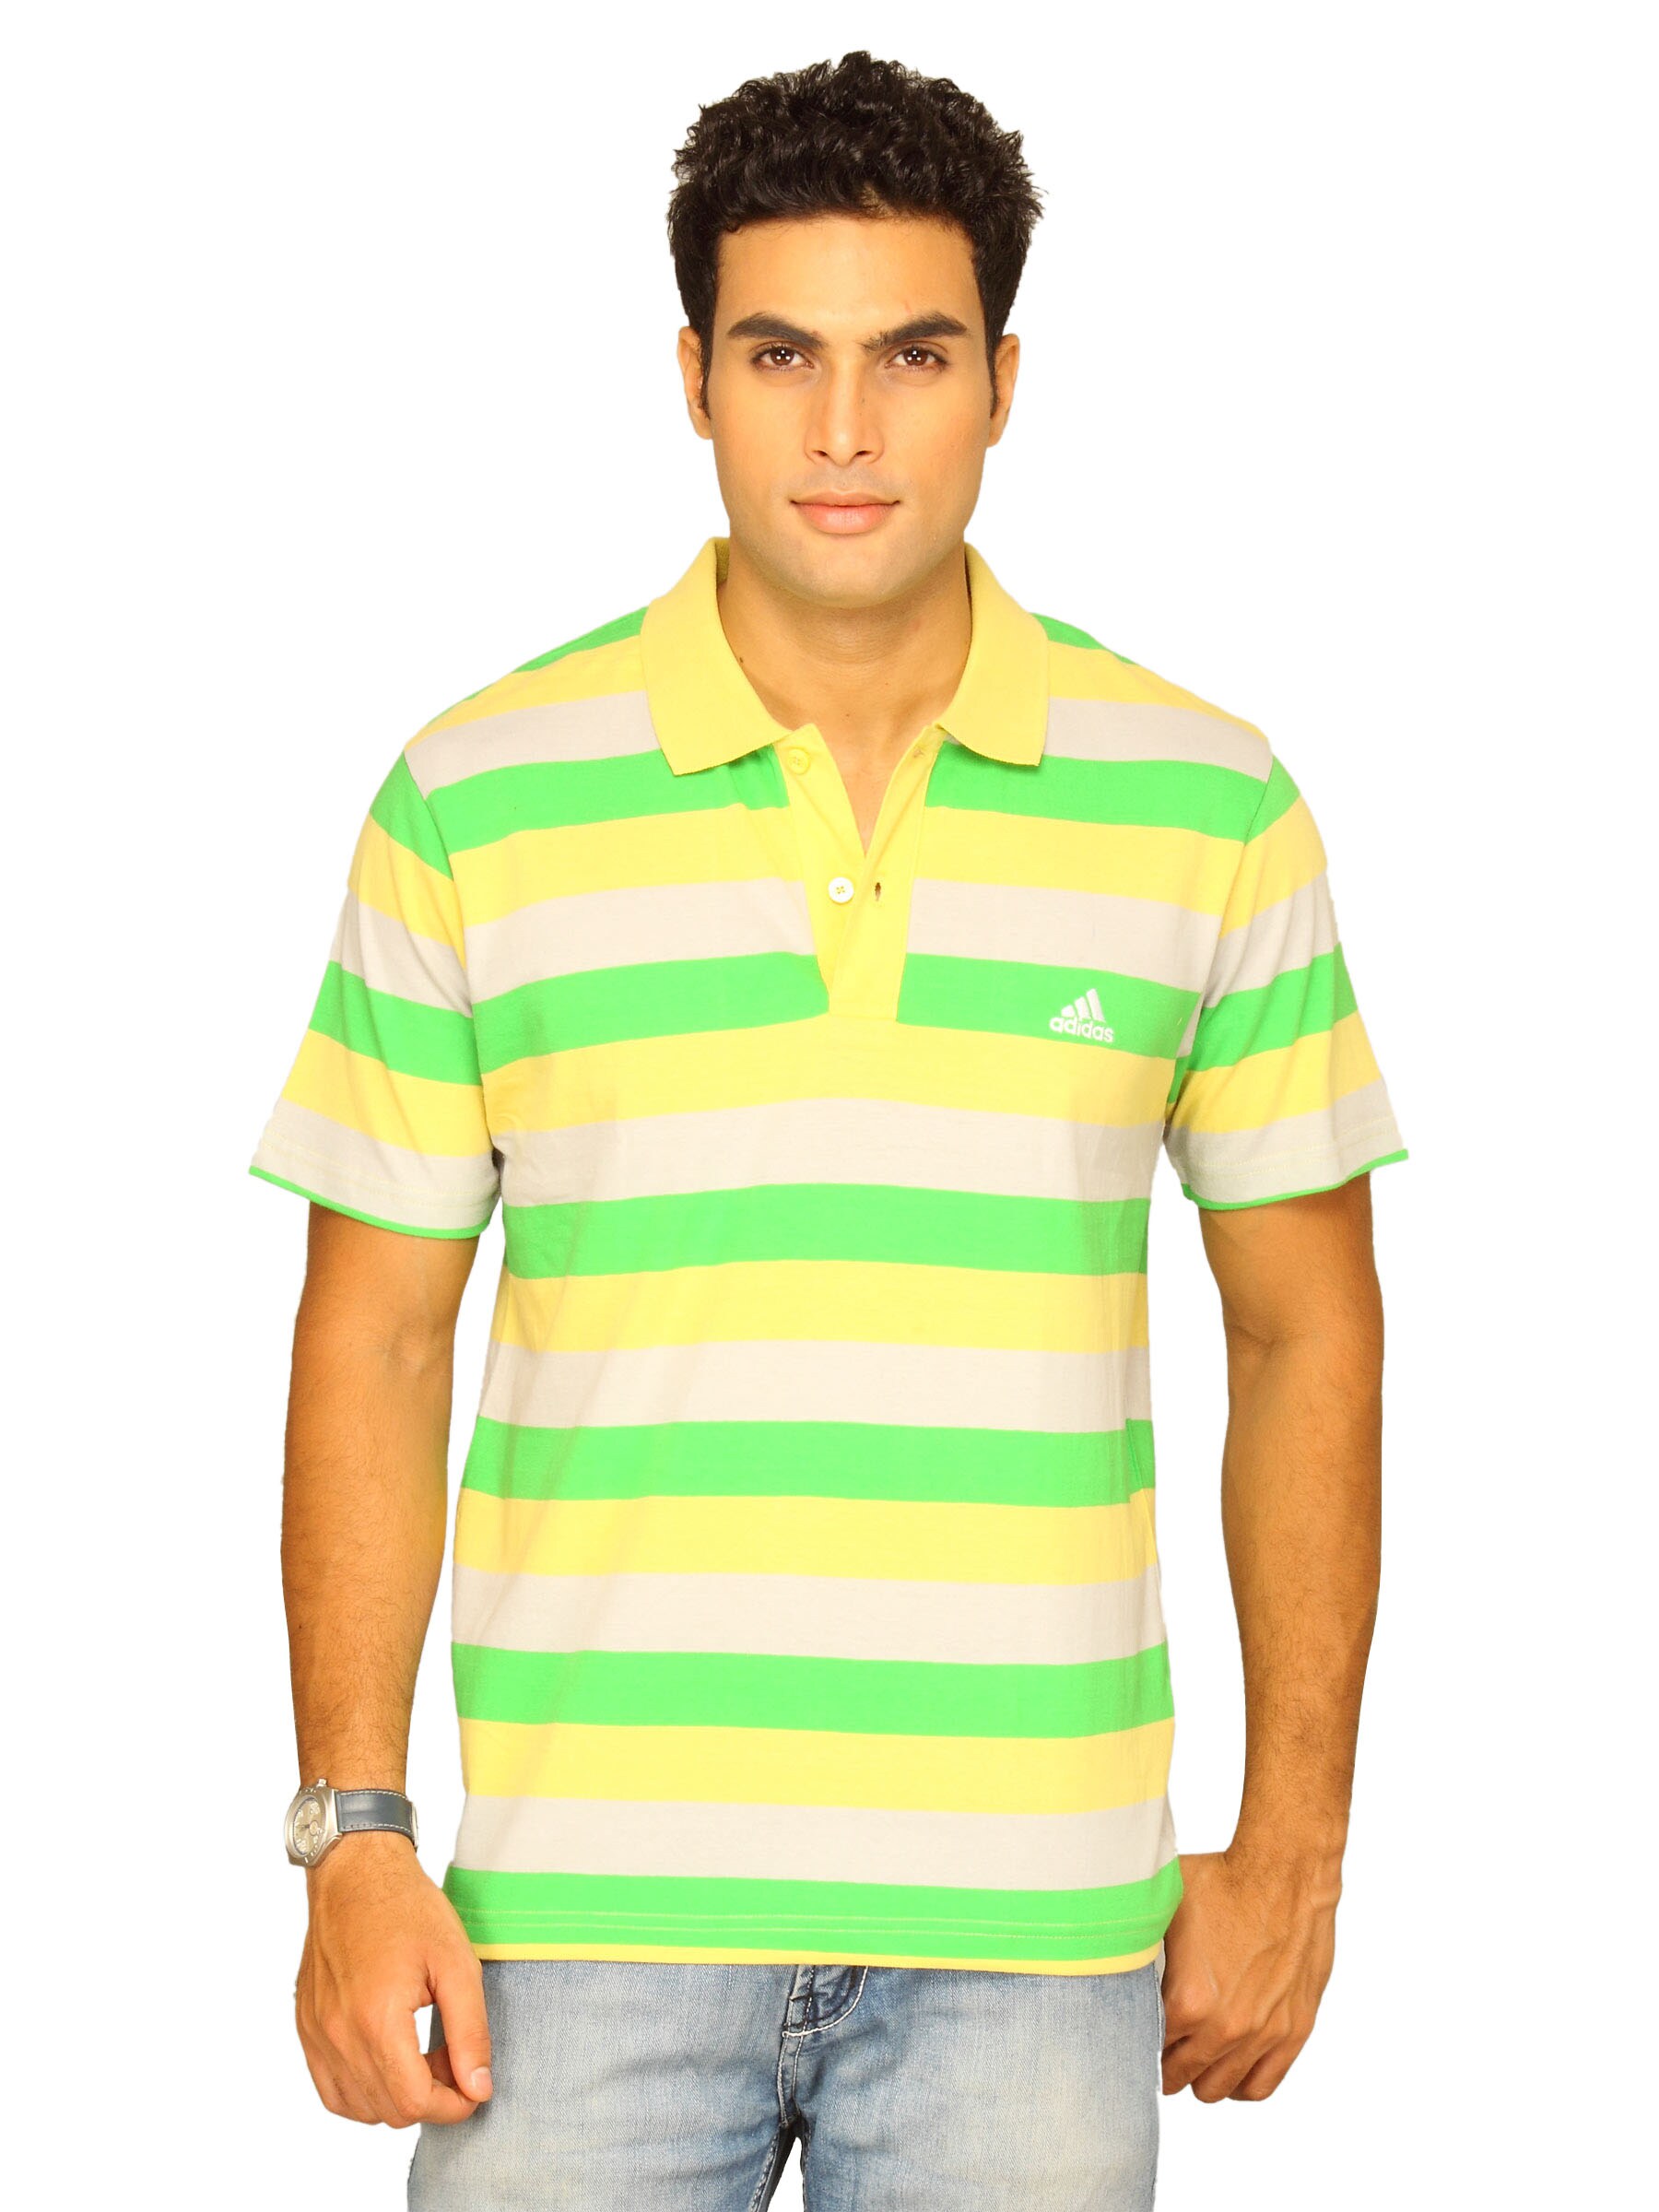 ADIDAS Men's Stripe Polo Green Grey Yellow T-shirt